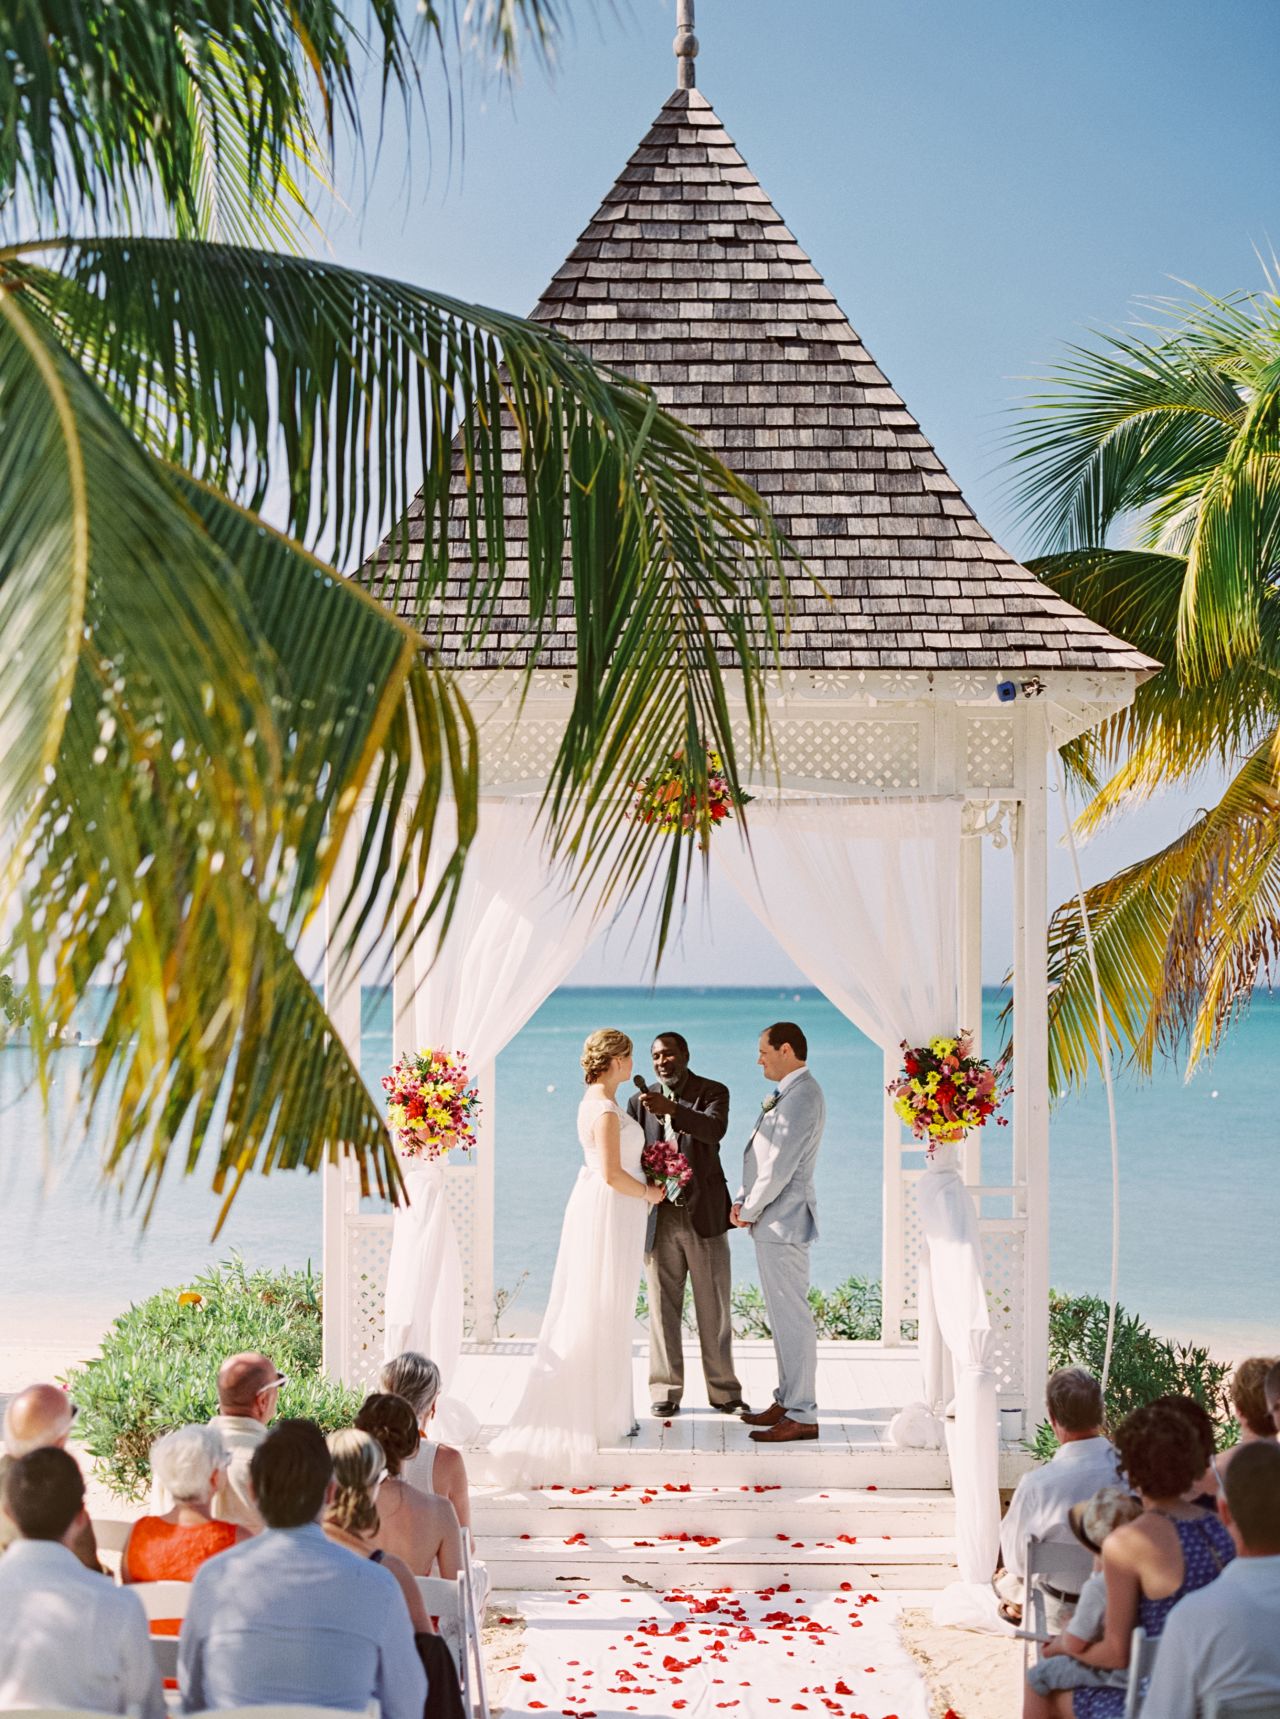  Hotel Riu Montego Bay, Jamaica offers beach weddings on a budget.